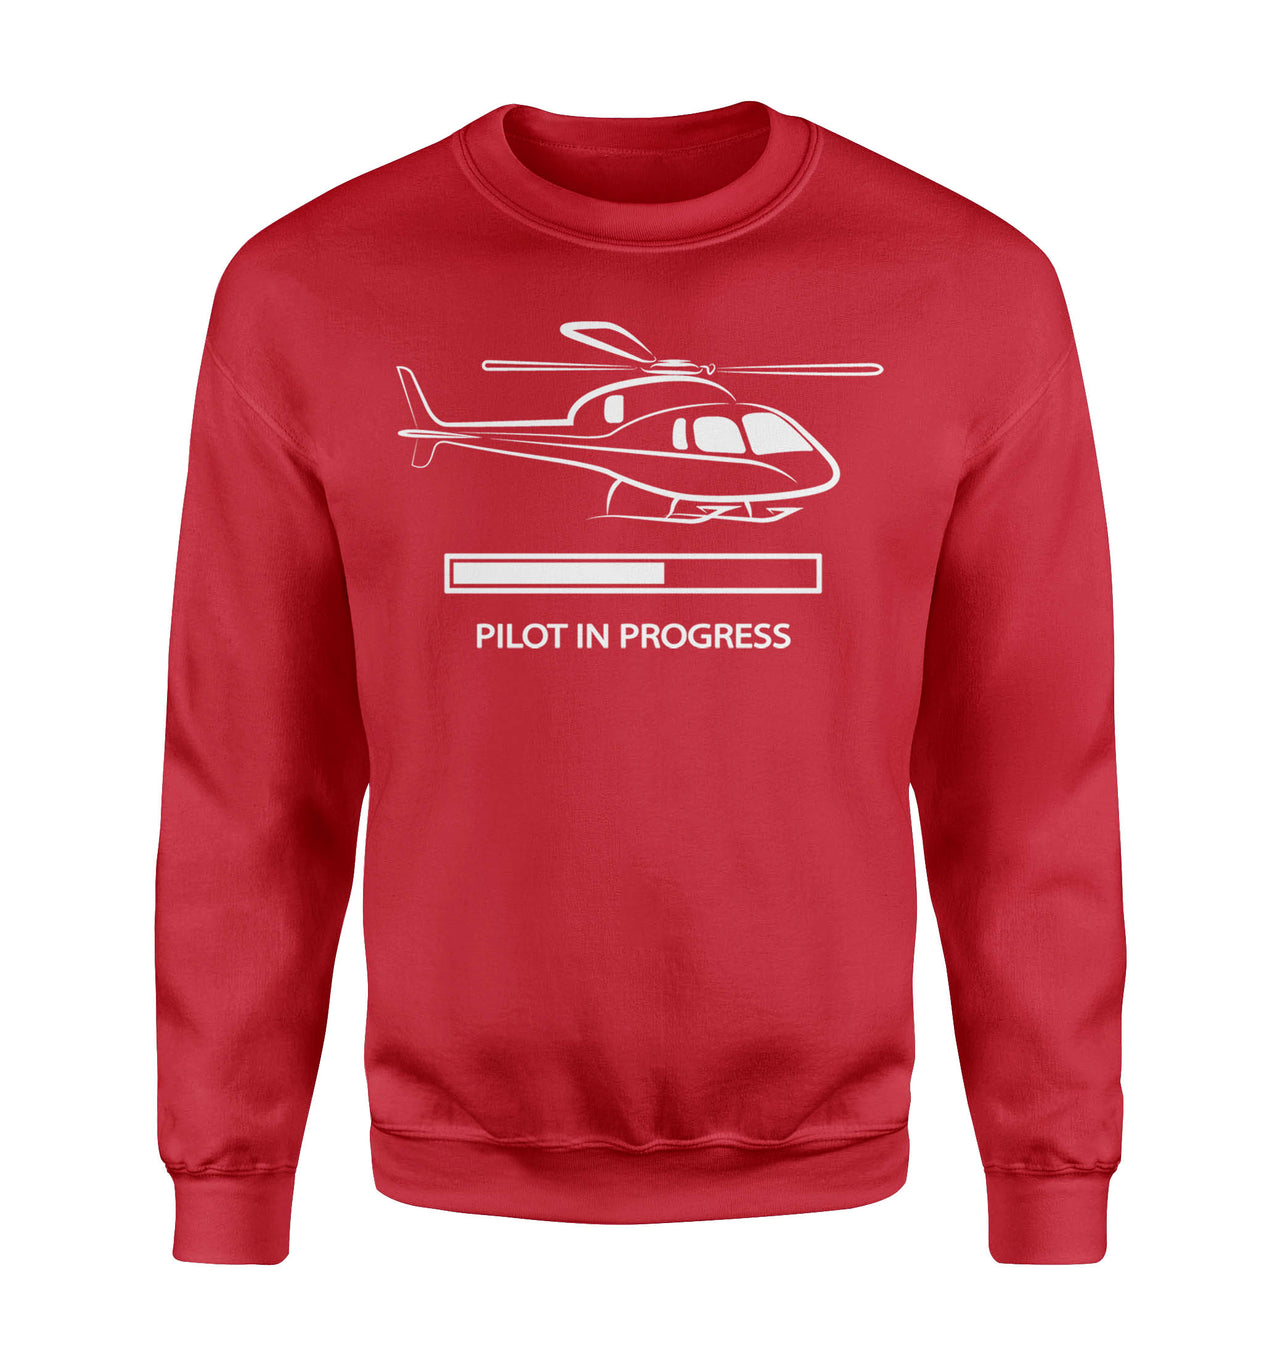 Pilot In Progress (Helicopter) Designed Sweatshirts